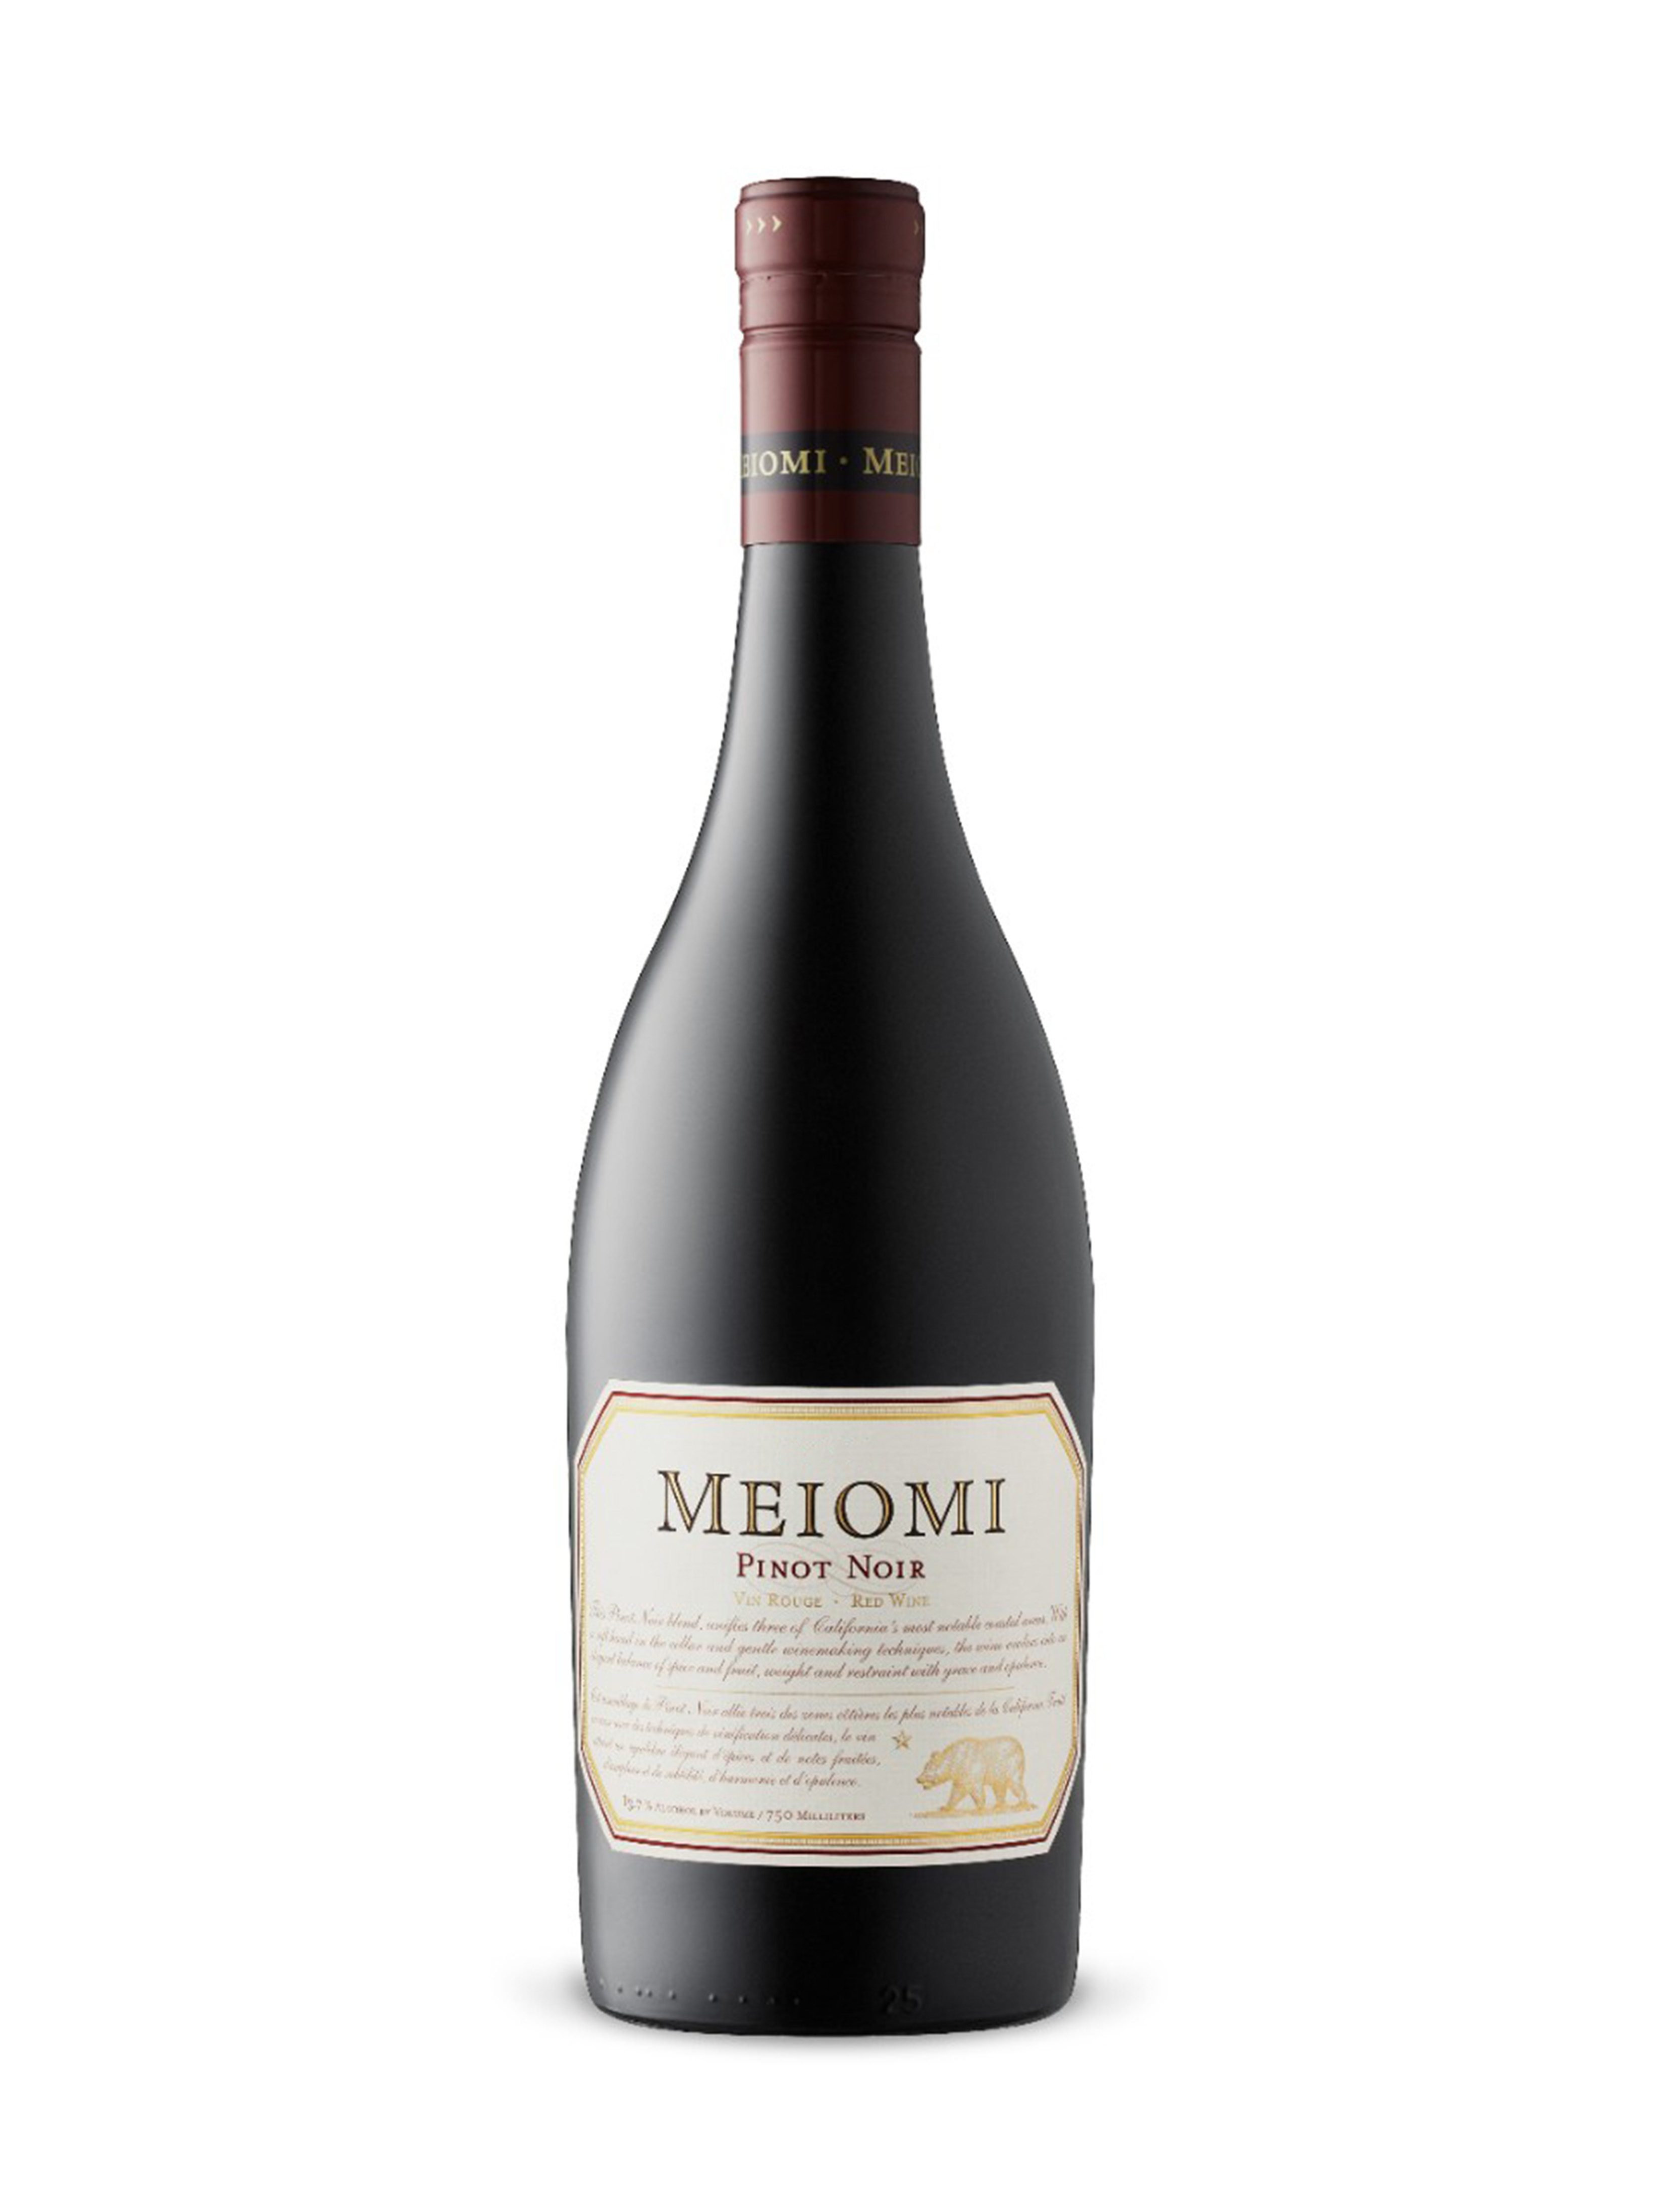 Meiomi Pinot Noir - View Image 1